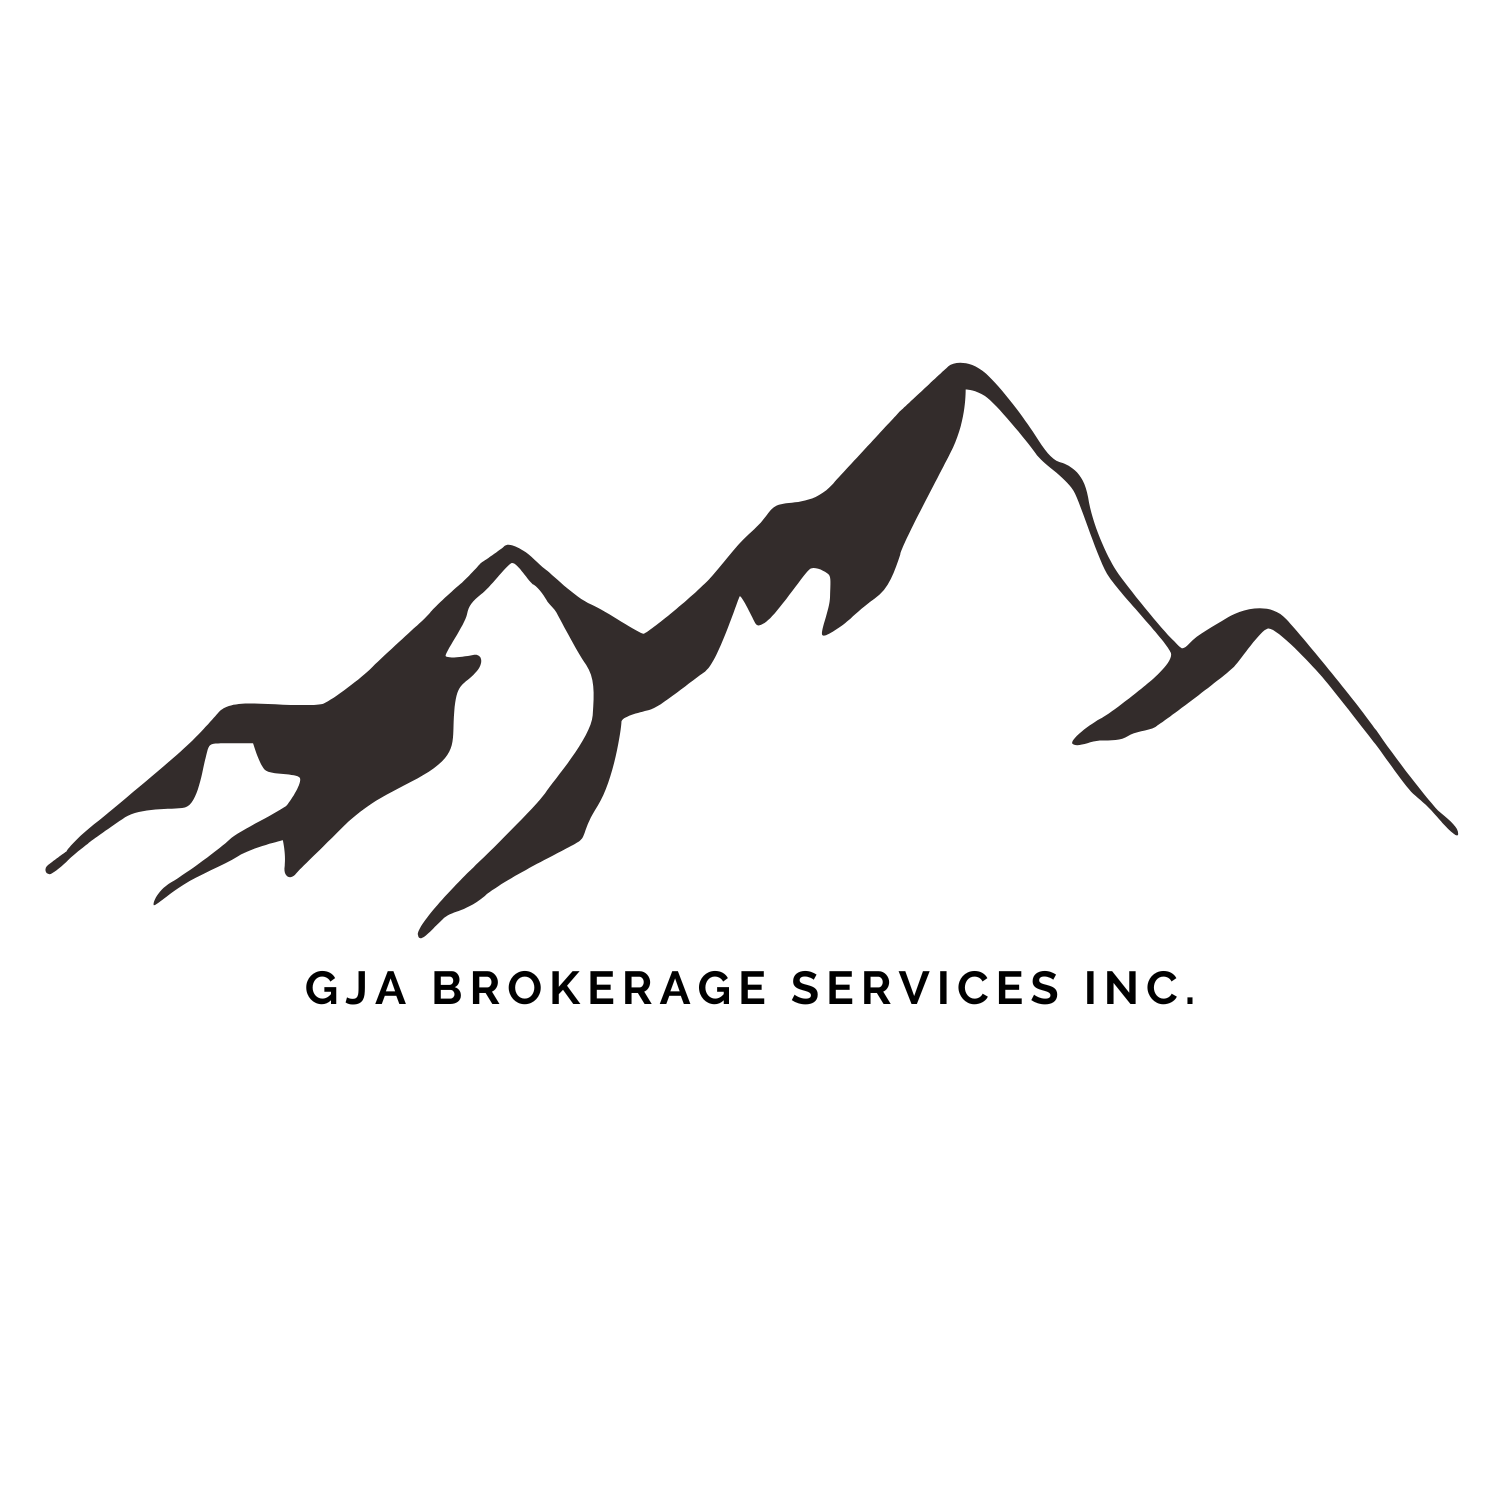 GJA Brokerage Services Inc